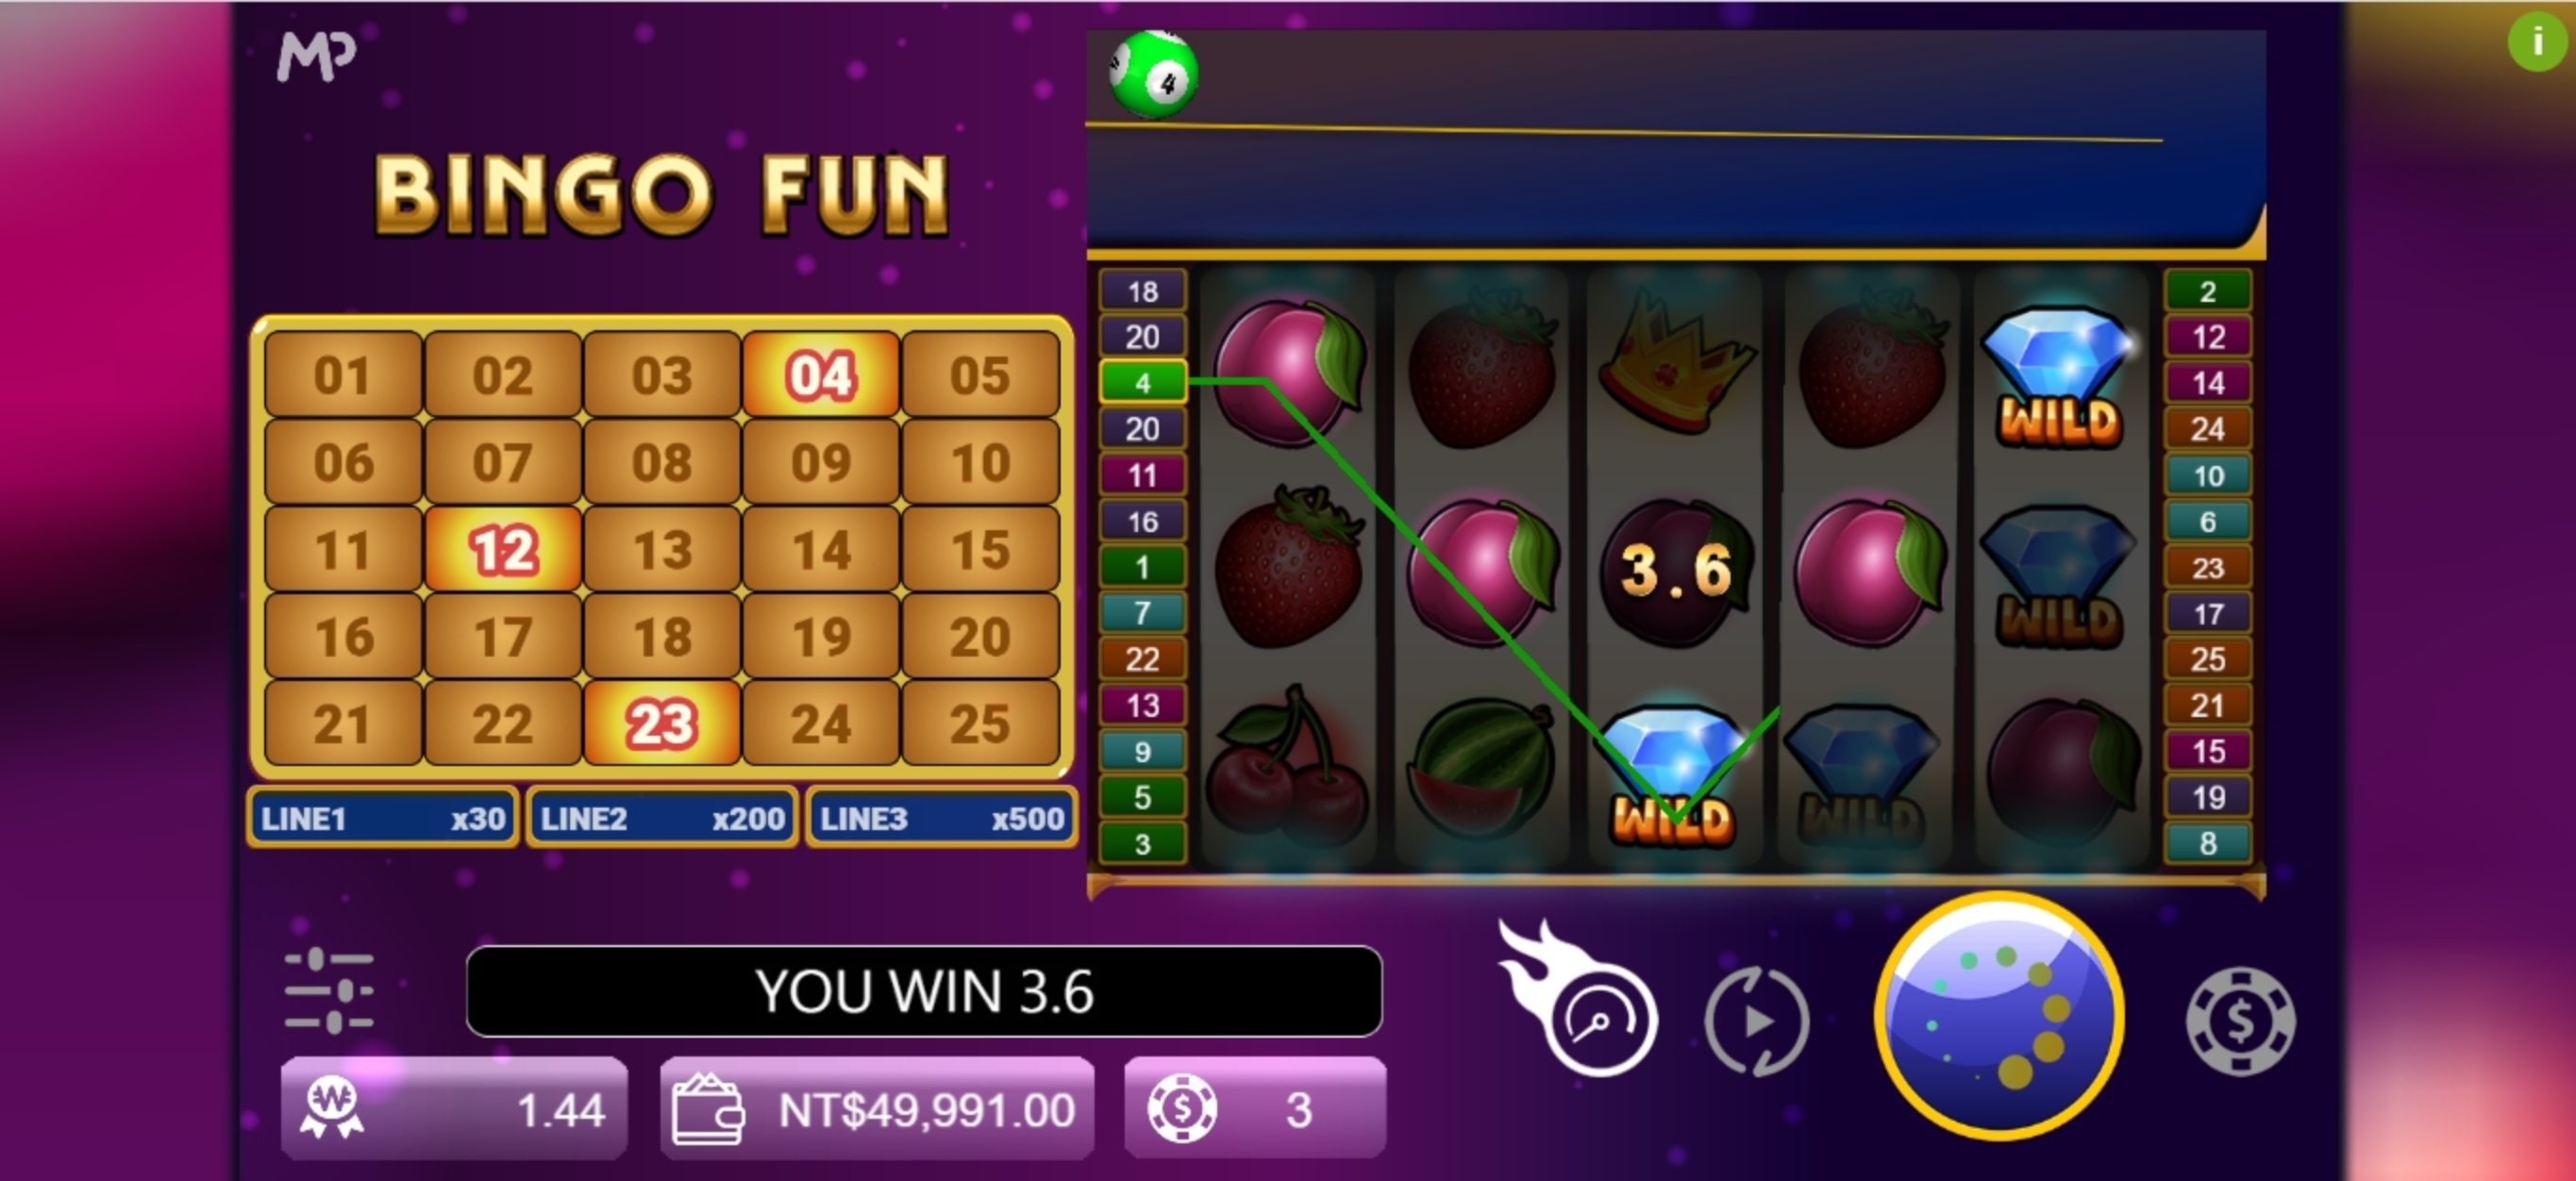 Win Money in Bingo Fun Free Slot Game by Manna Play